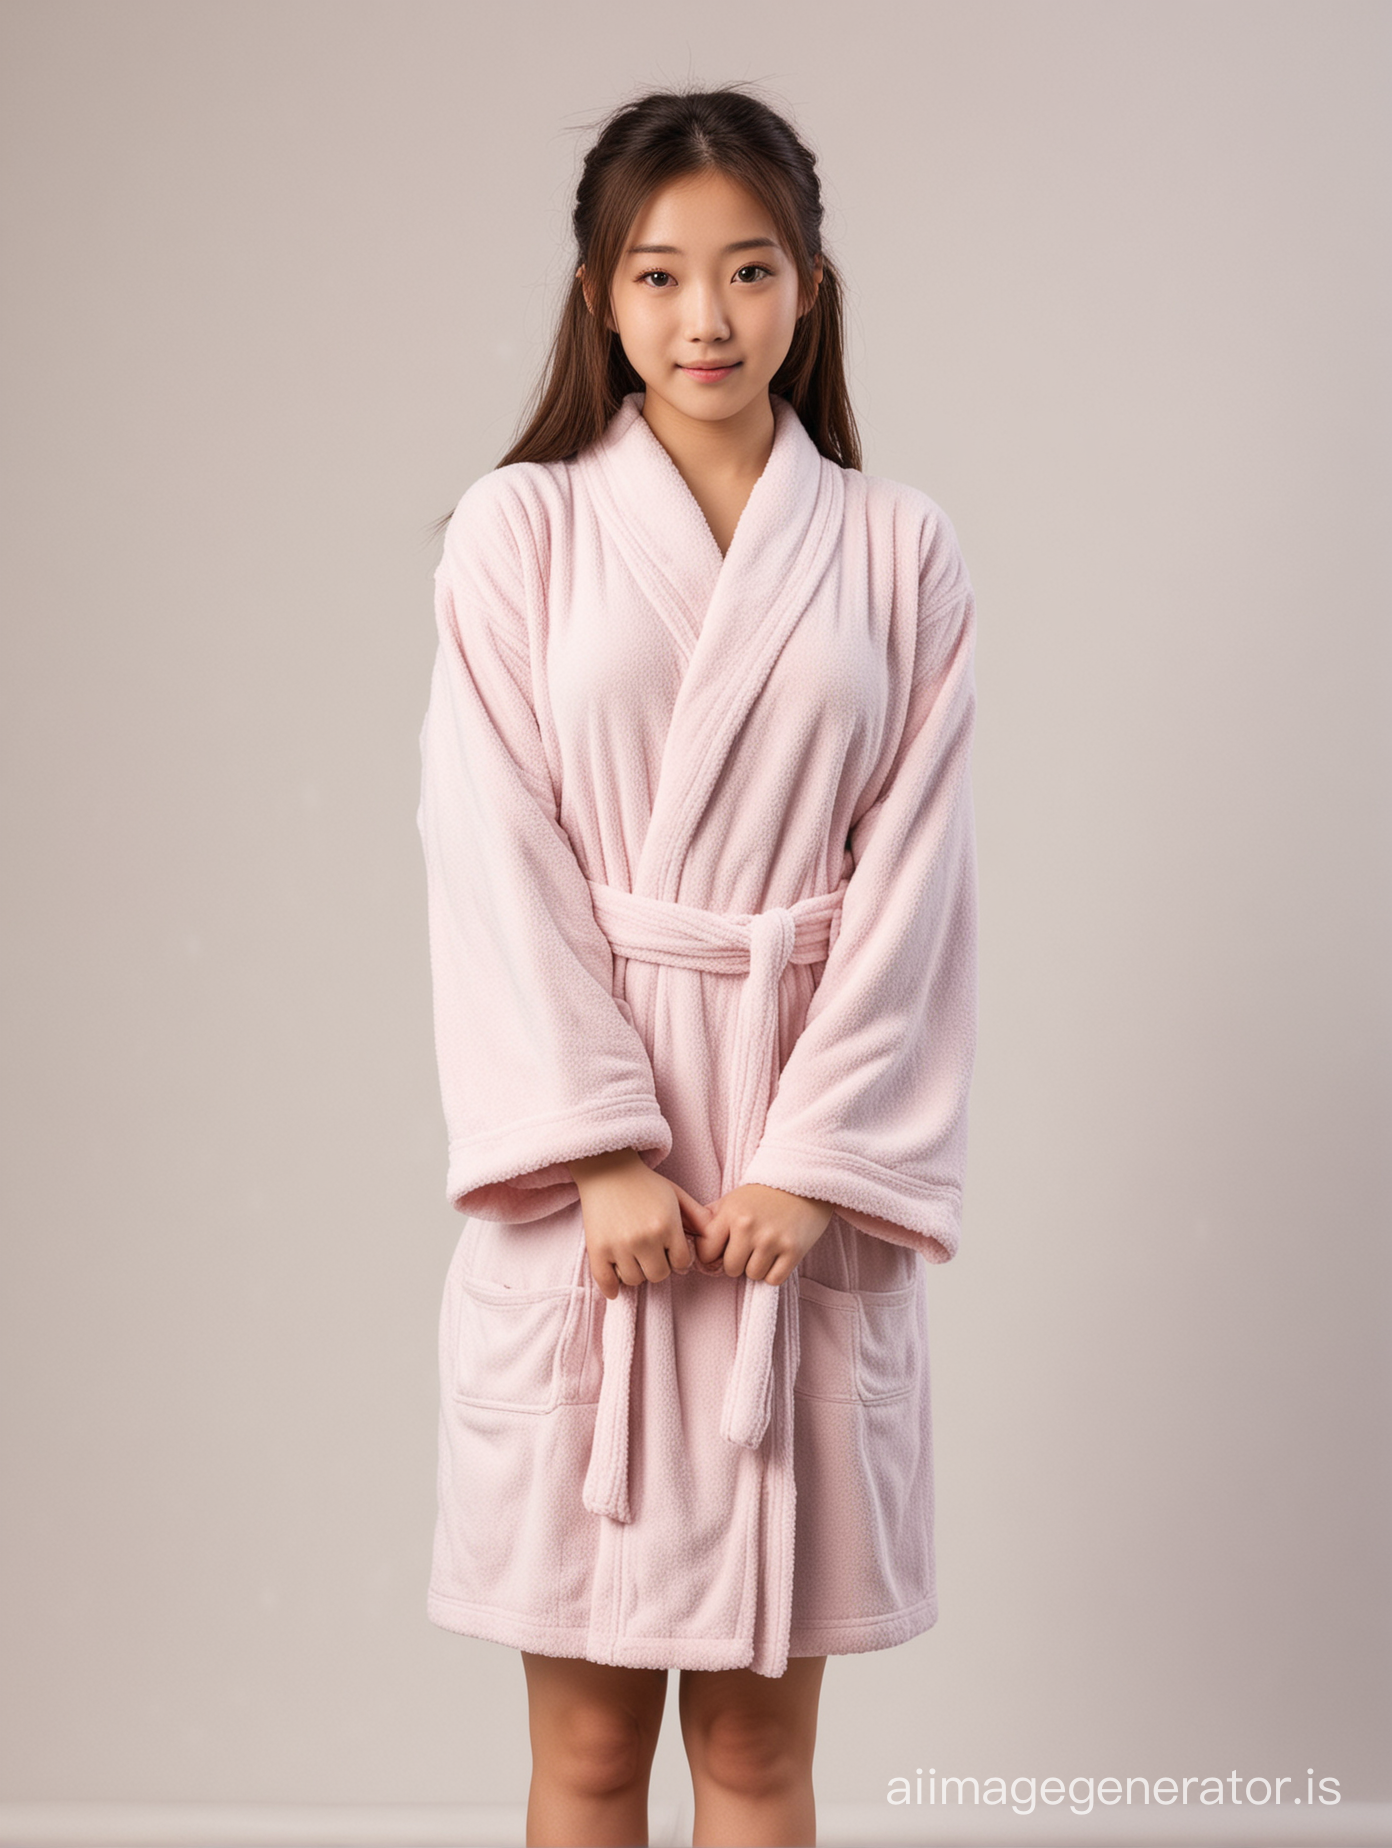 
japanese cute teen girl in bathrobe, front view, full body, 